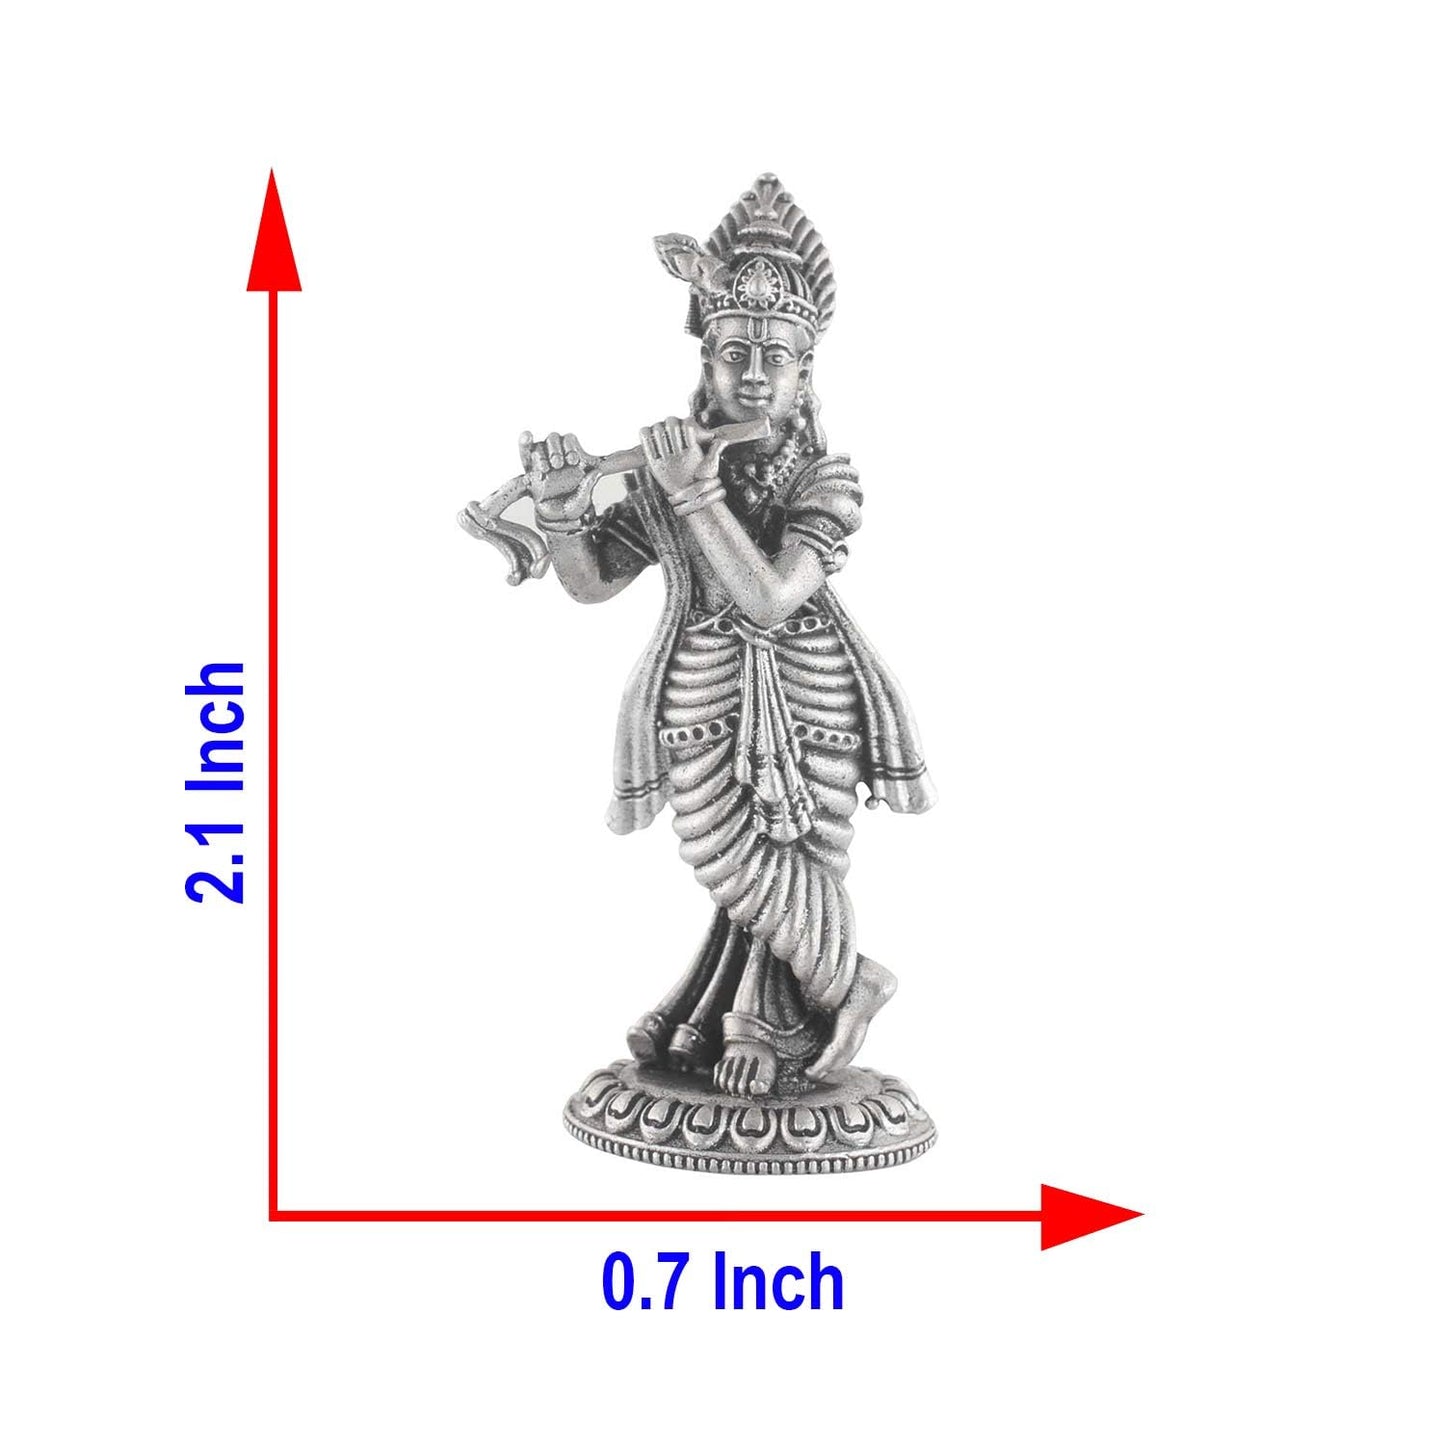 size of krishna idol